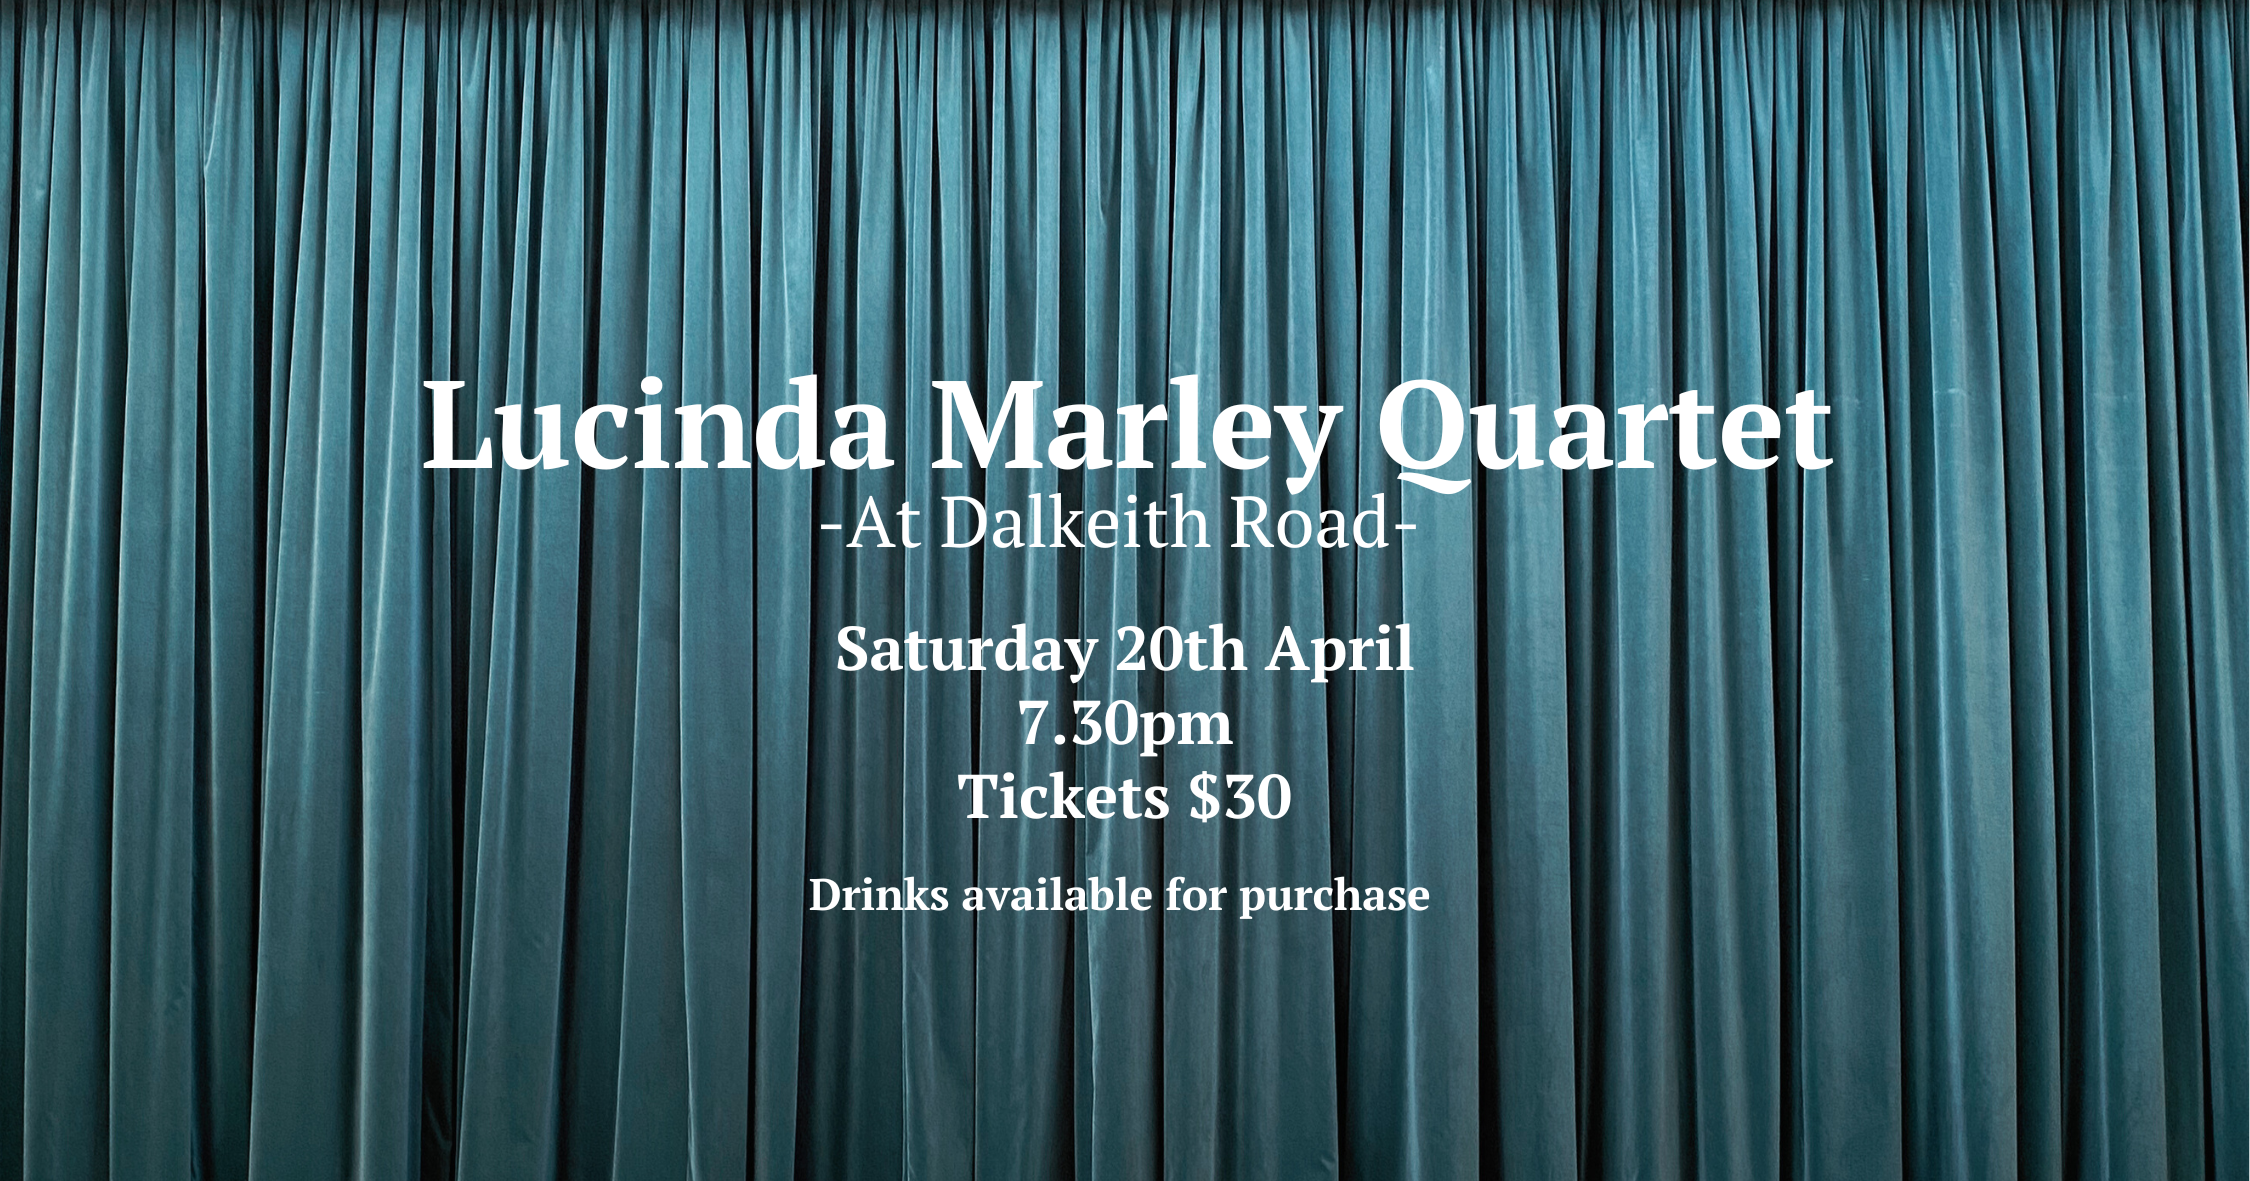 Lucinda Marley Quartet at Dalkeith Road